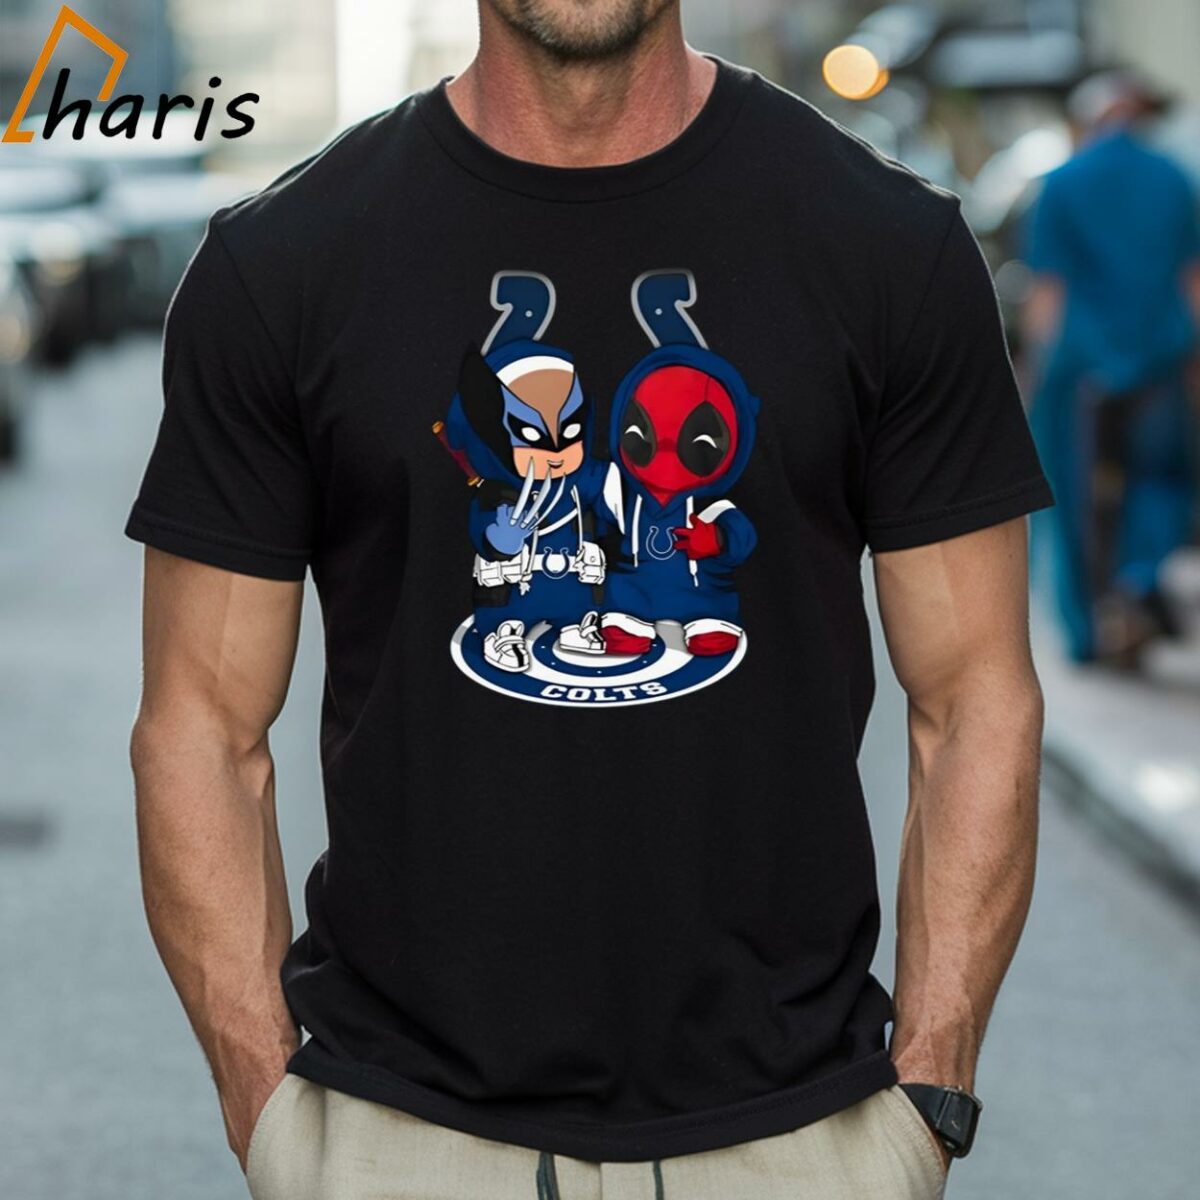 NFL Indianapolis Colts Deadpool T shirt 1 Shirt